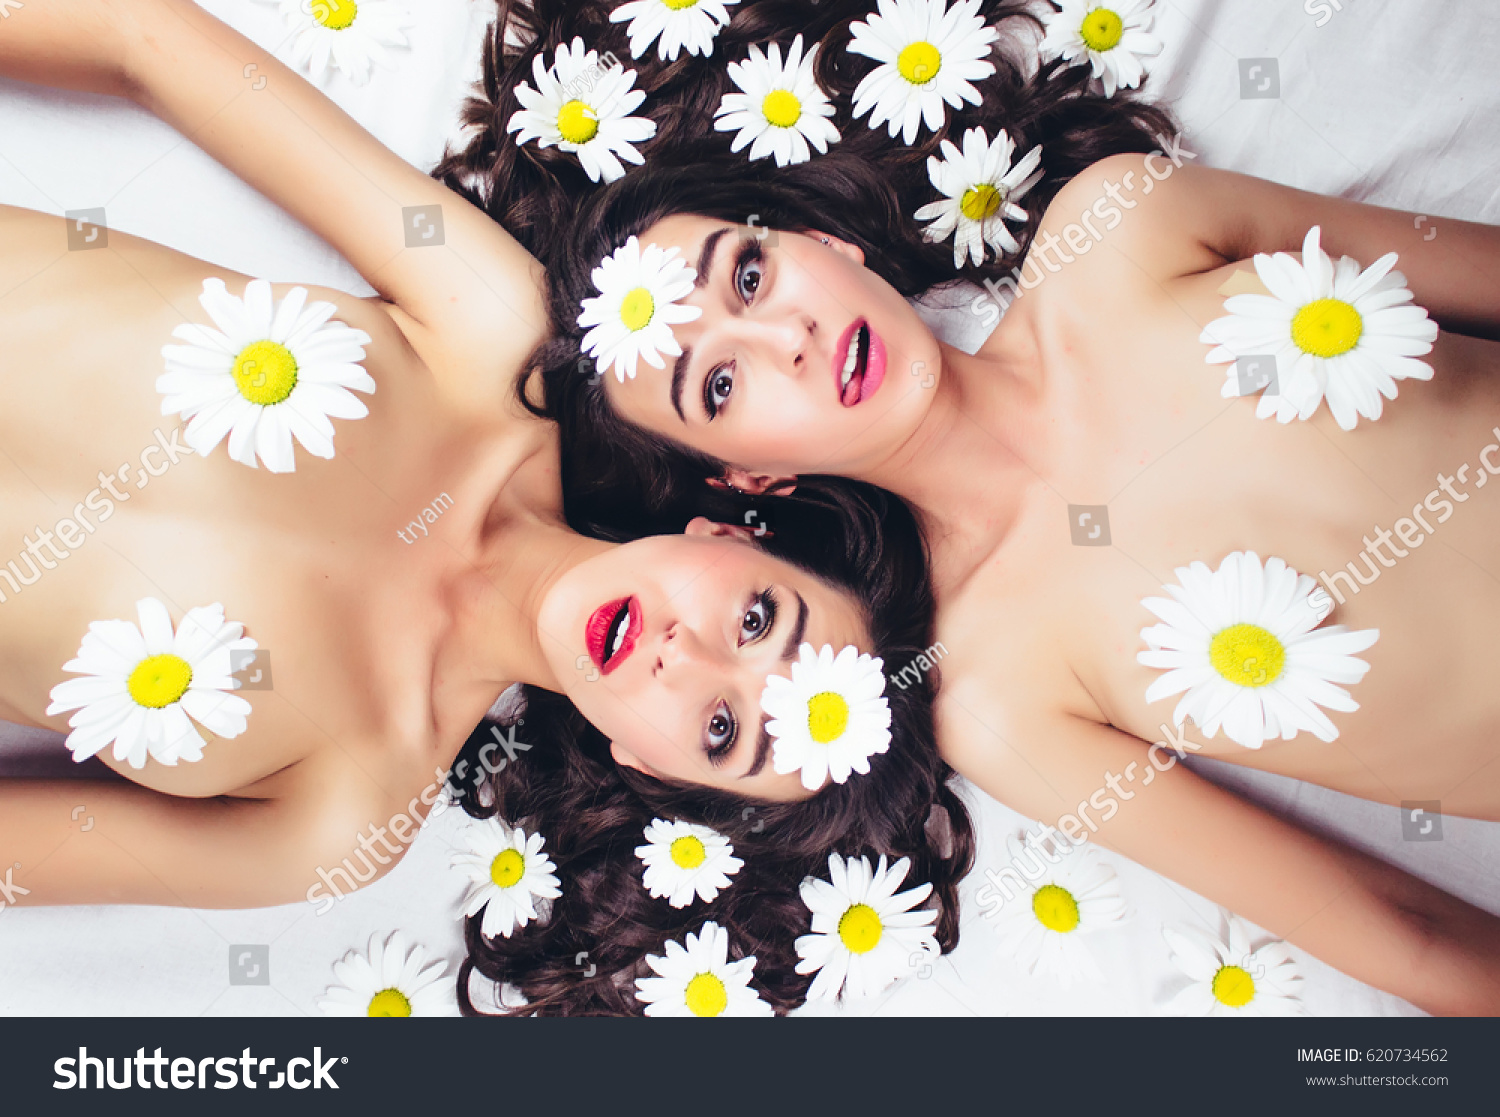 Naked girls fashion Two Fashion Topless Fun Summer Girls Stock Photo Edit Now 620734562